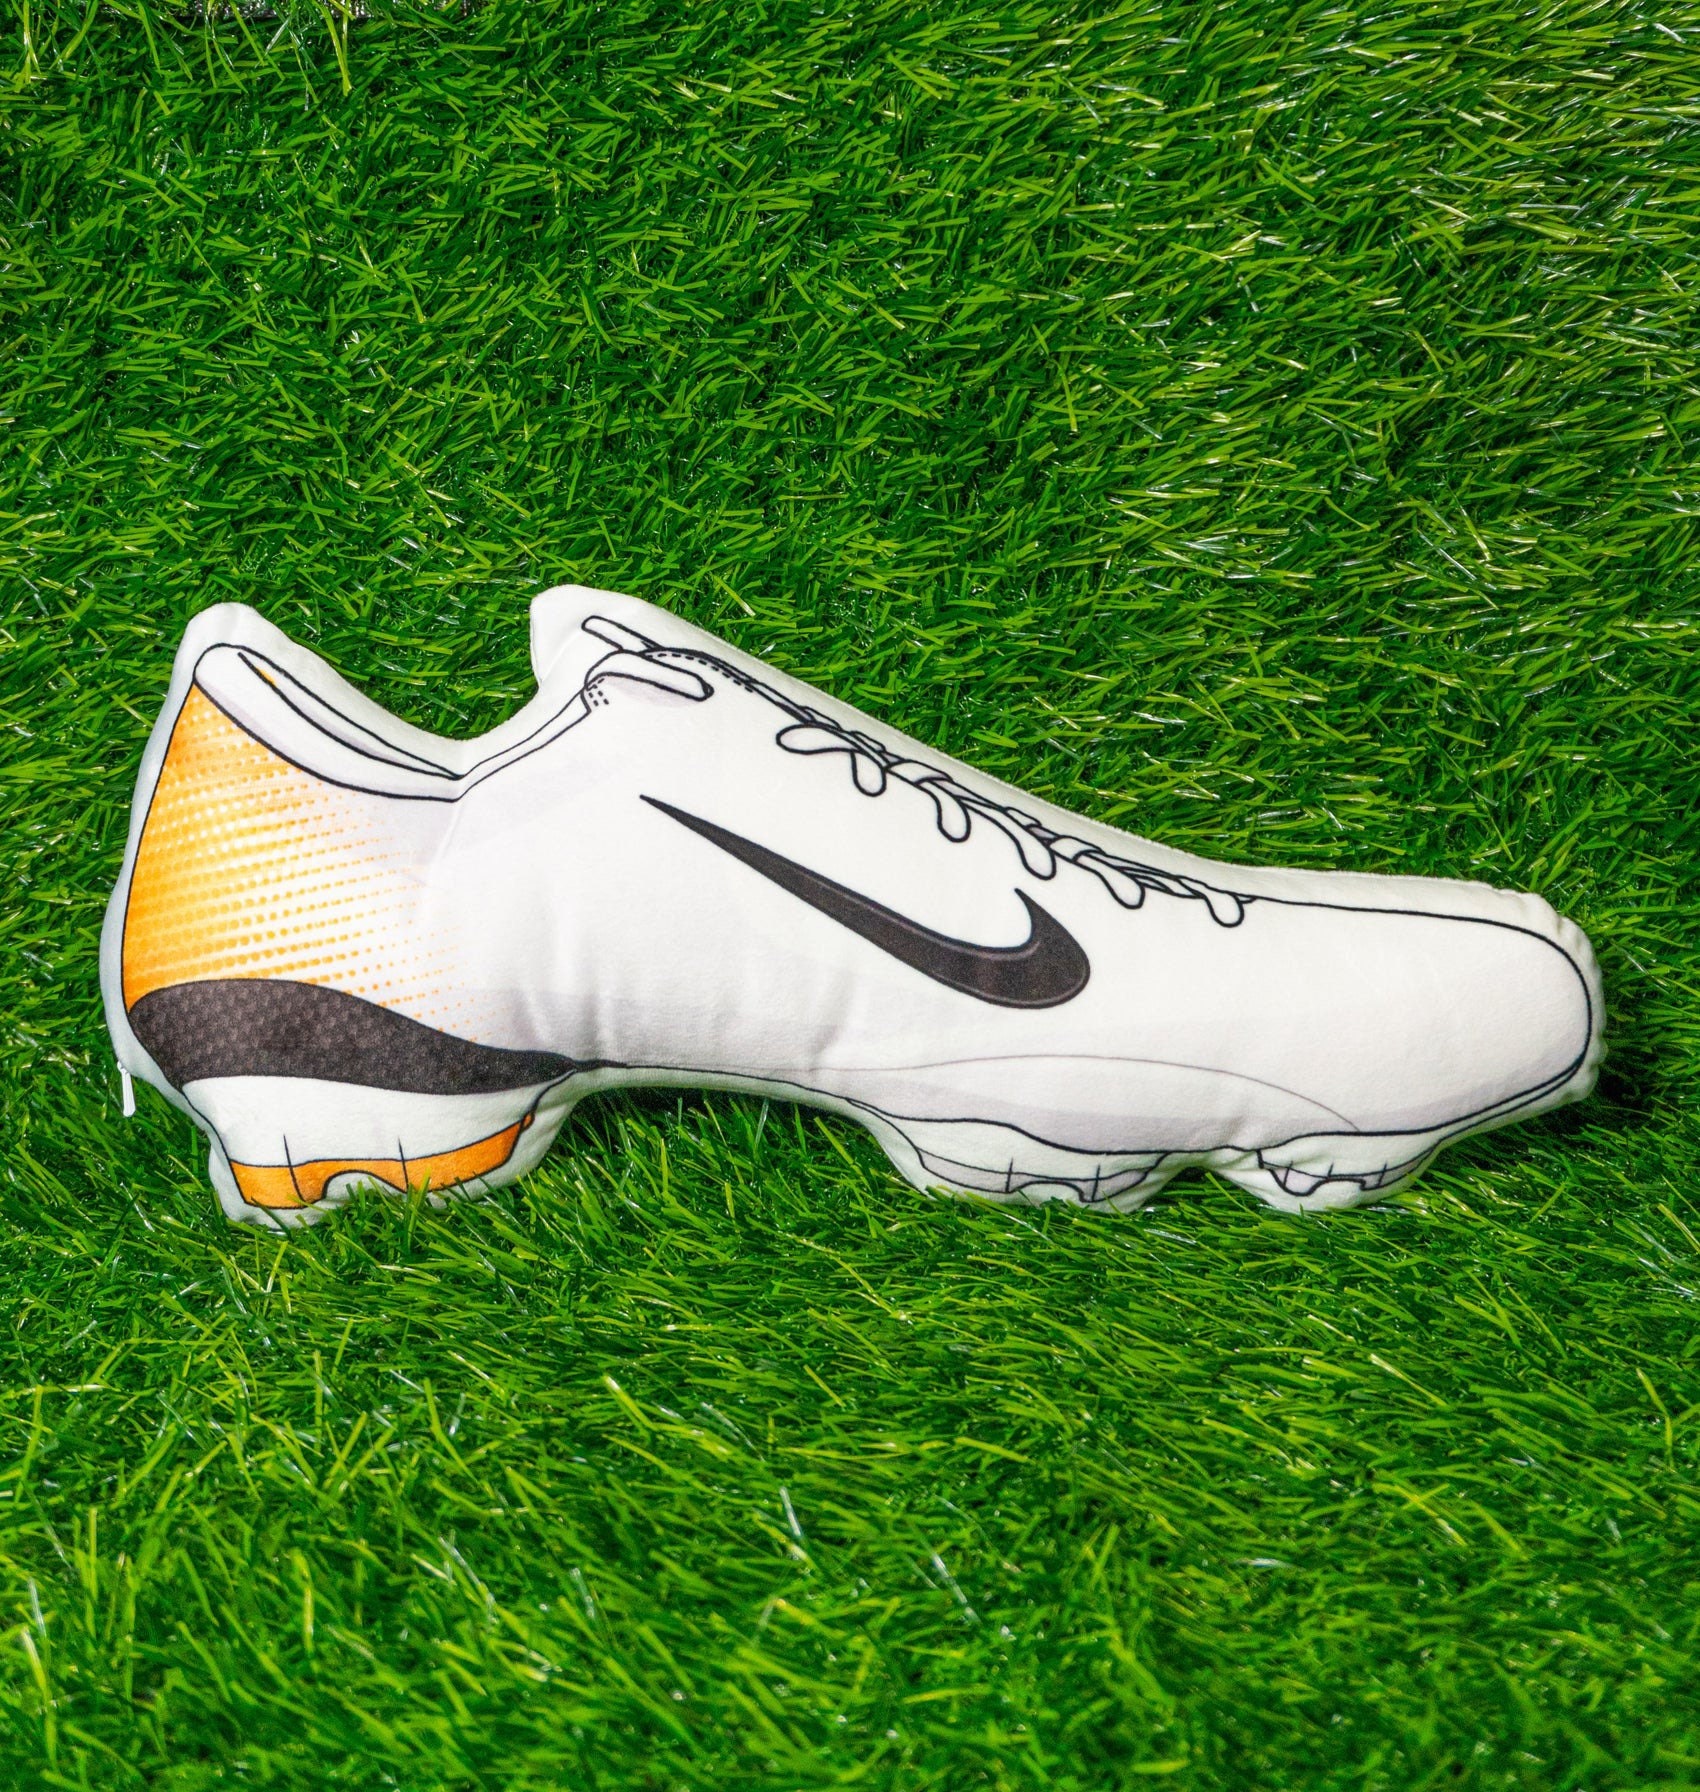 Nike Mercurial III Gold & White Football Boot - Etsy